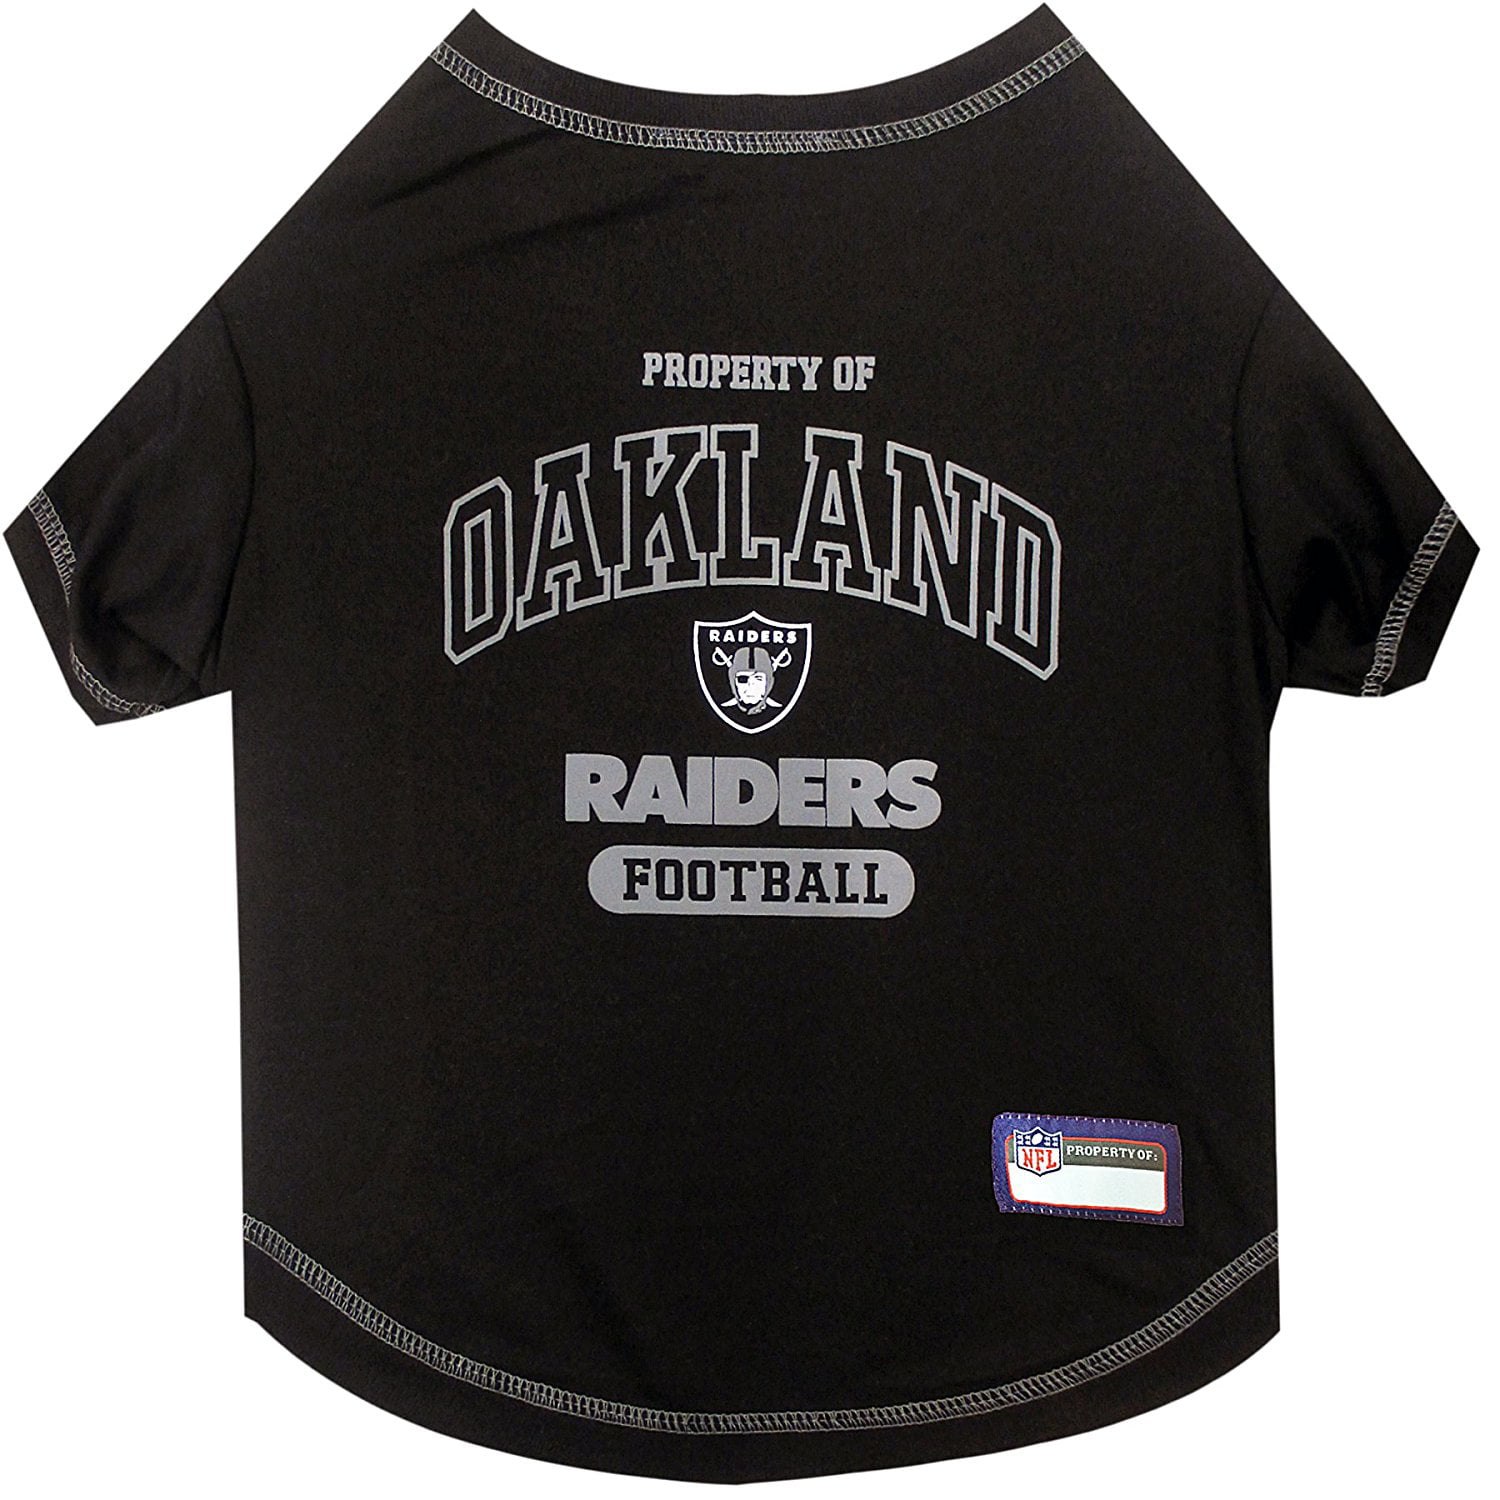 oakland raiders football shirt